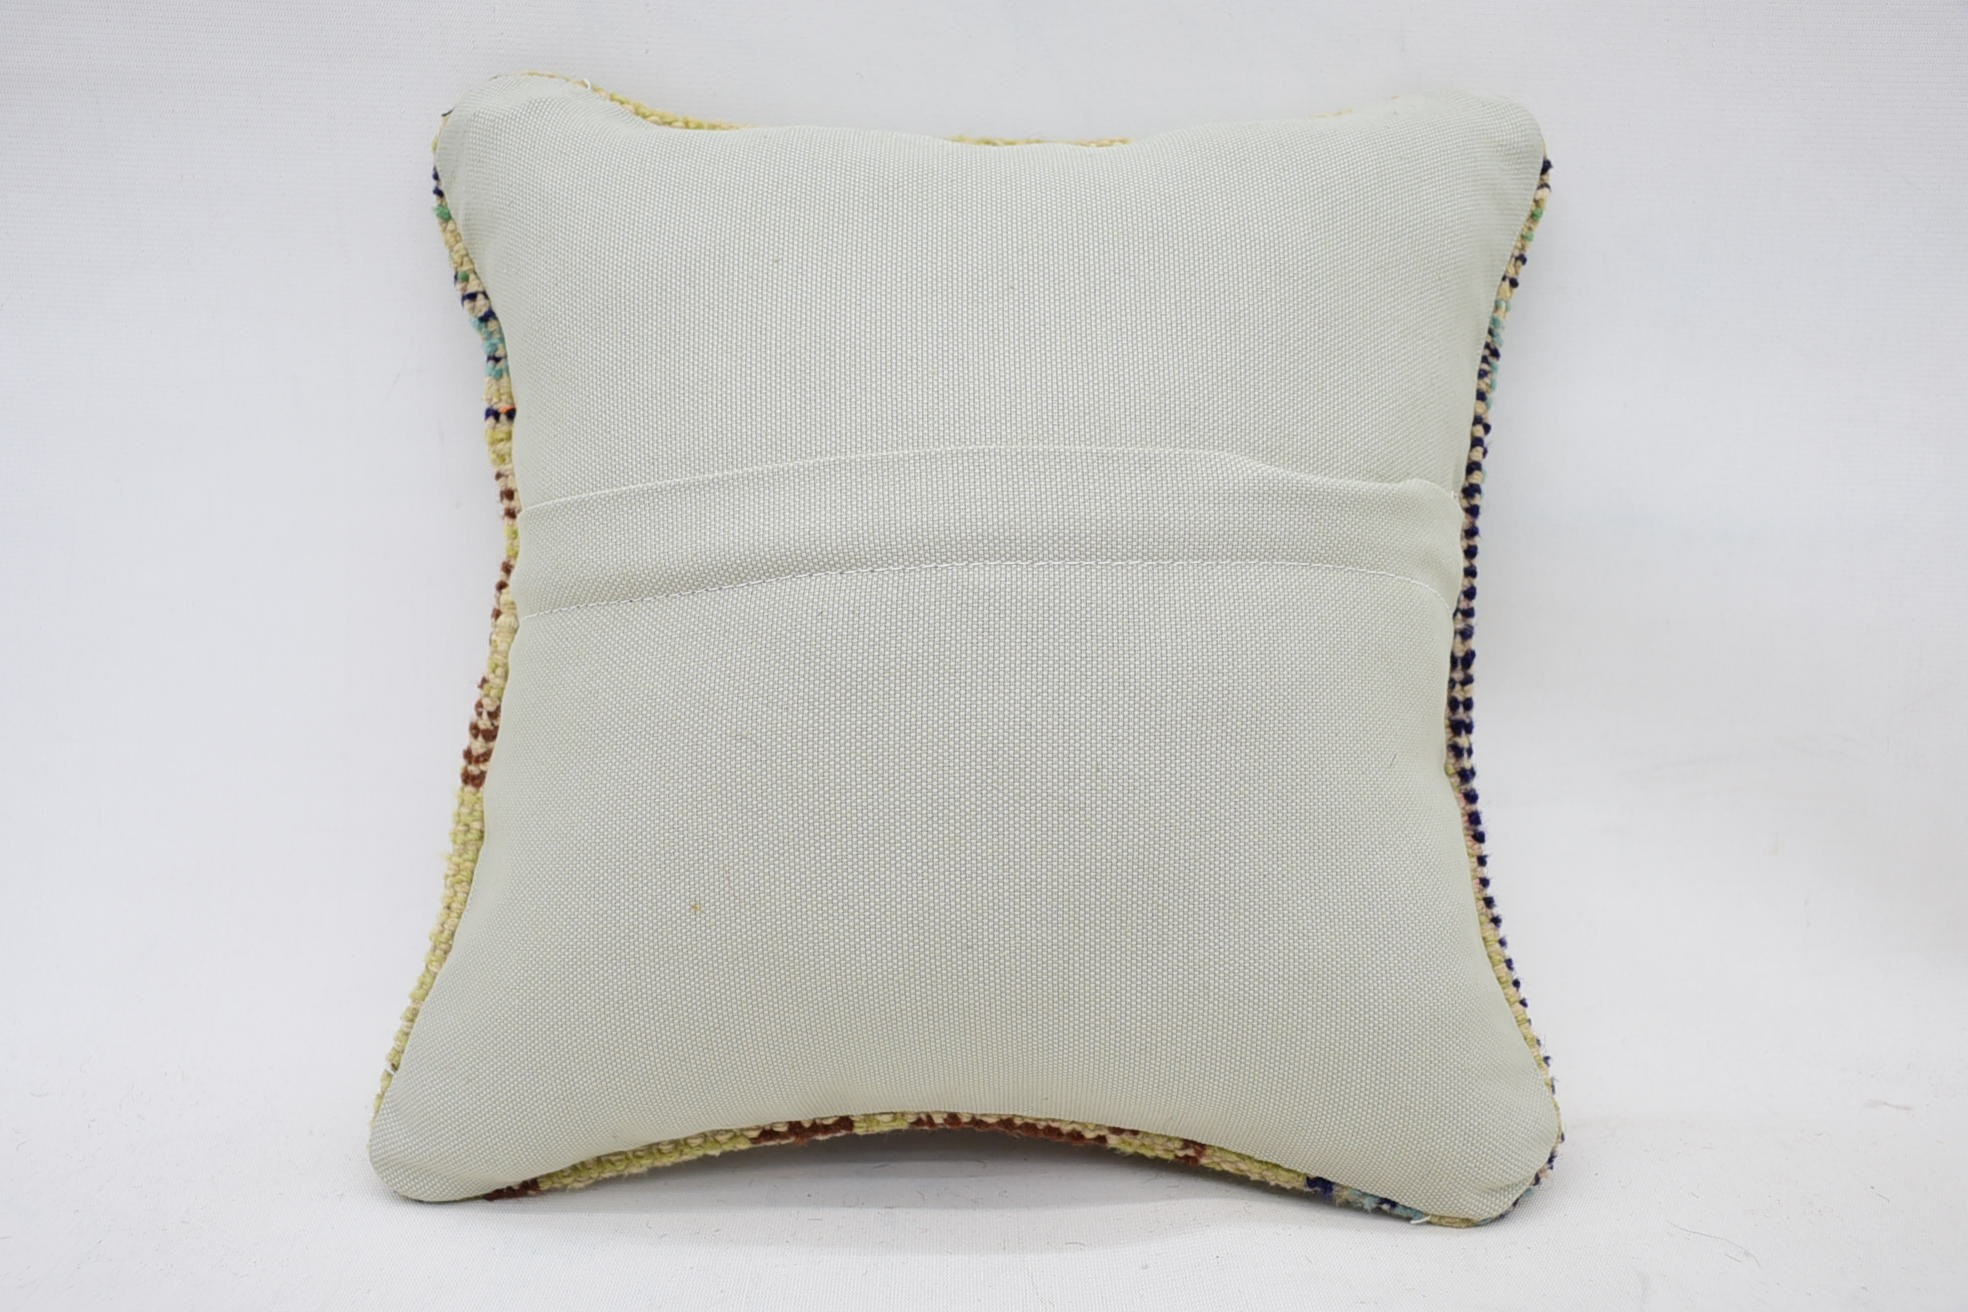 Home Decor Pillow, Handwoven Pillow Cover Cushion Case, 12"x12" Yellow Pillow Cover, Boho Pillow, Bed Pillow, Turkish Pillow